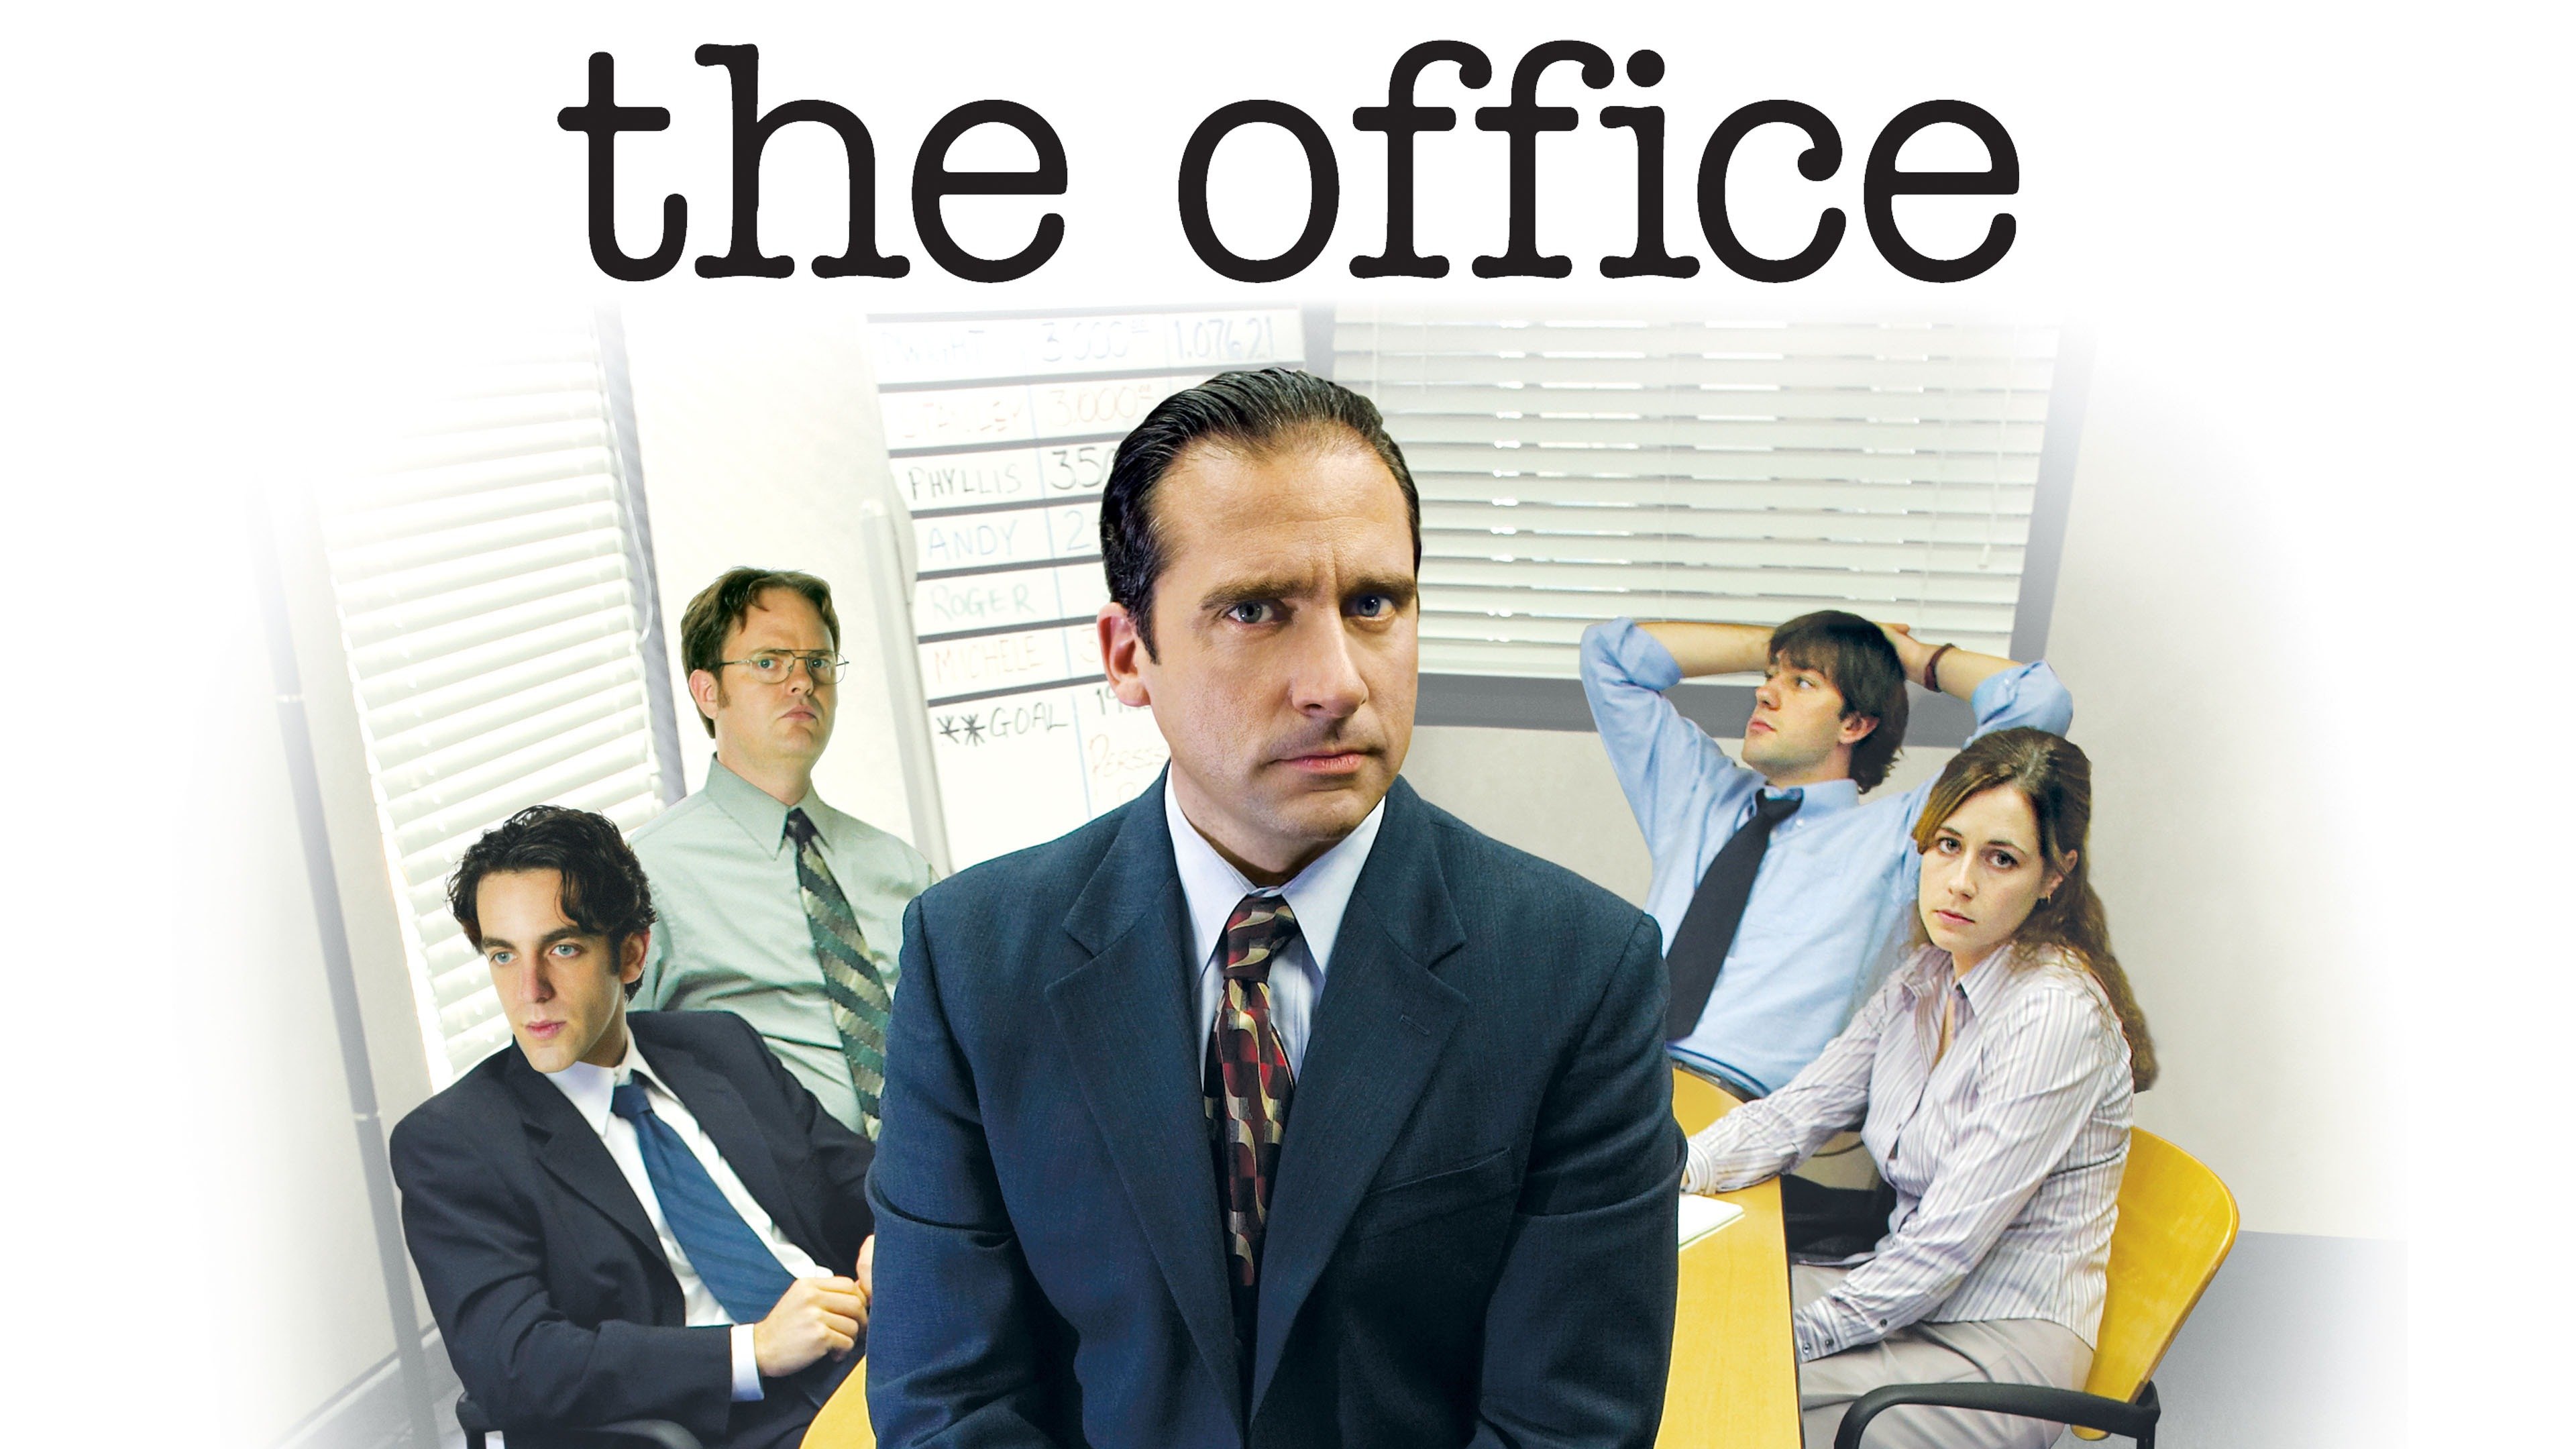 The office season 2 CarryCentine